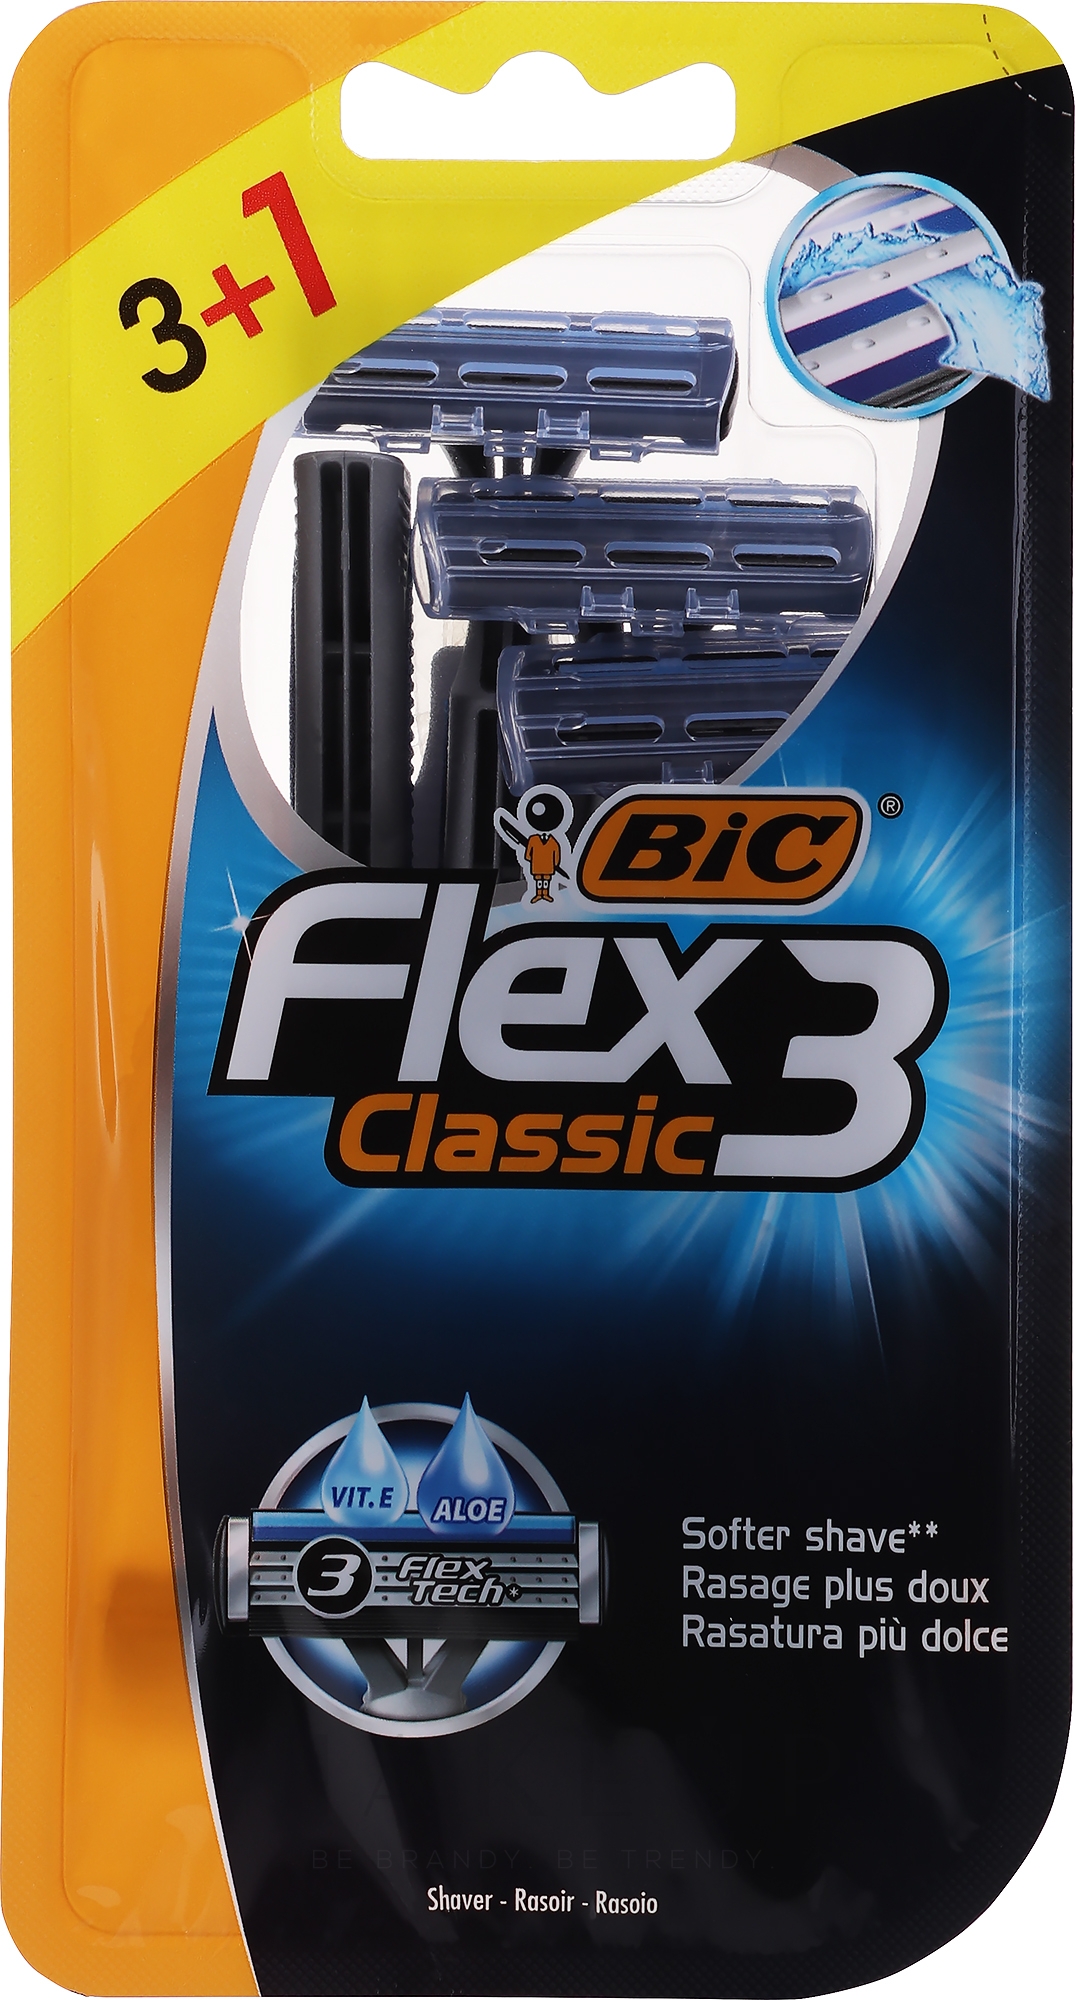 Einwegrasierer Flex 3 Classic 4 St. - Bic Flex 3 Classic — Bild 4 St.